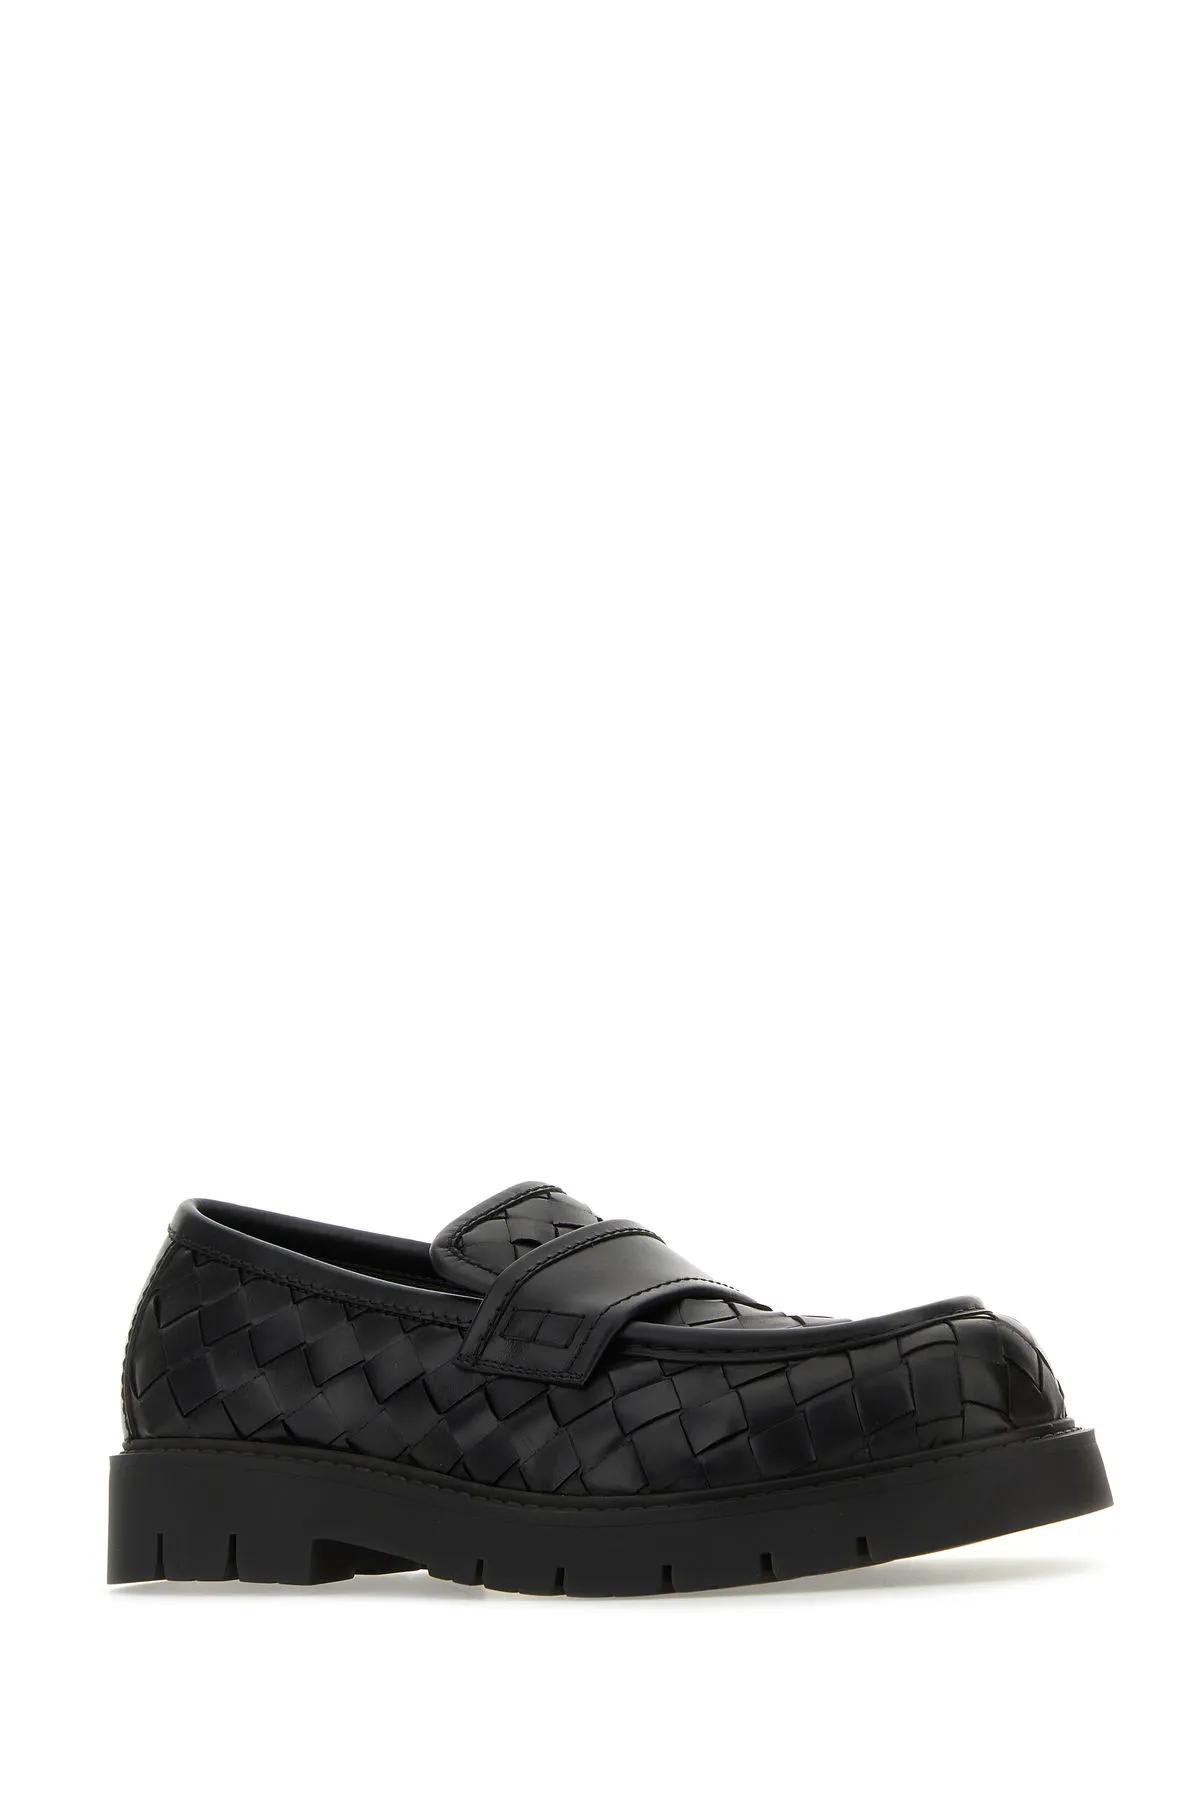 Shop Bottega Veneta Black Leather Loafers